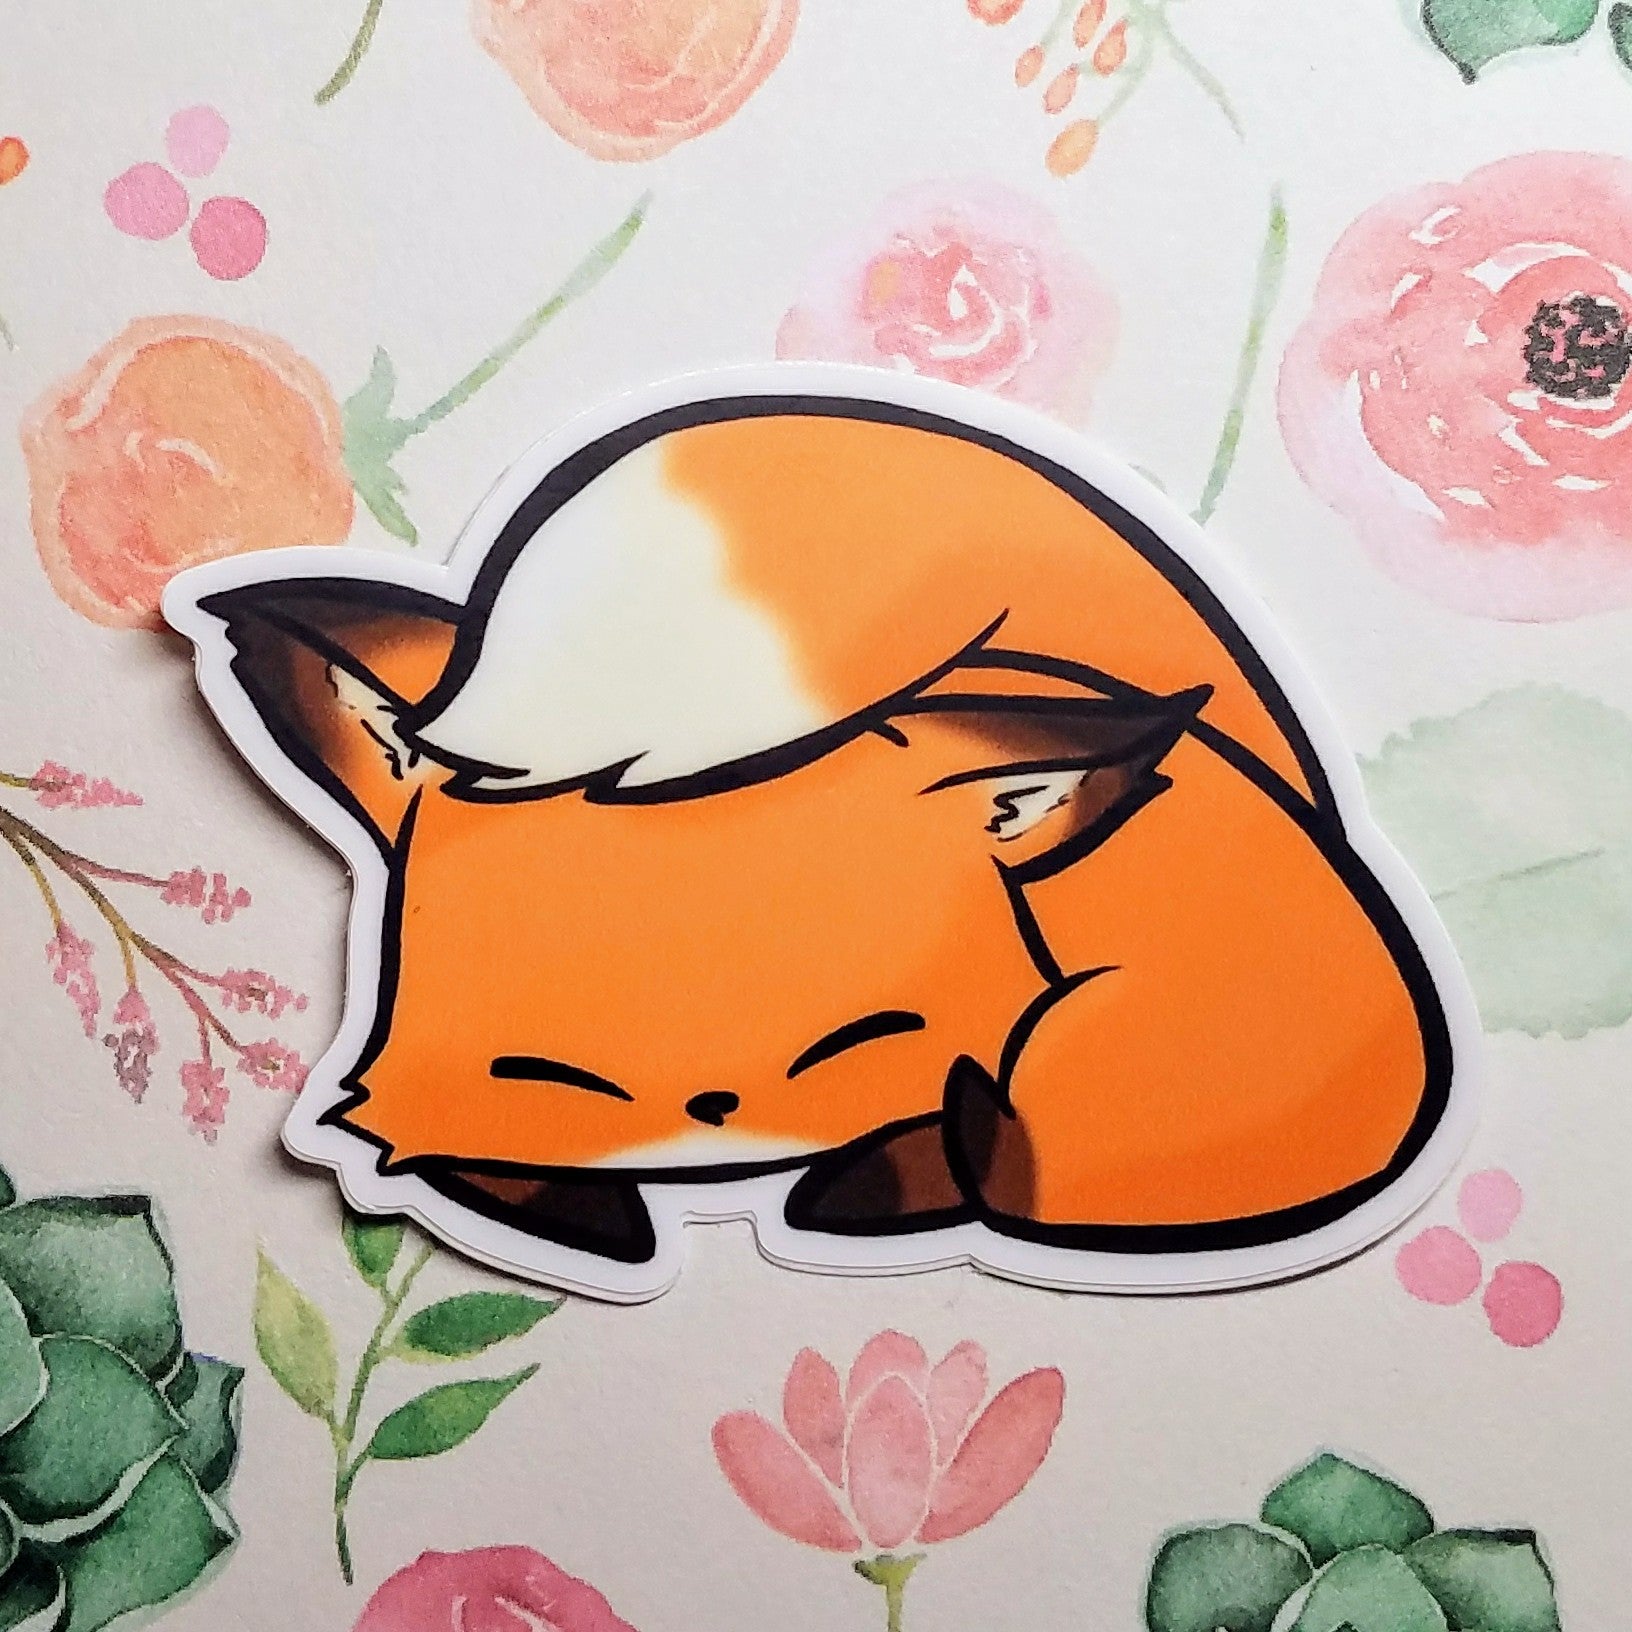 Cute Fox Sticker